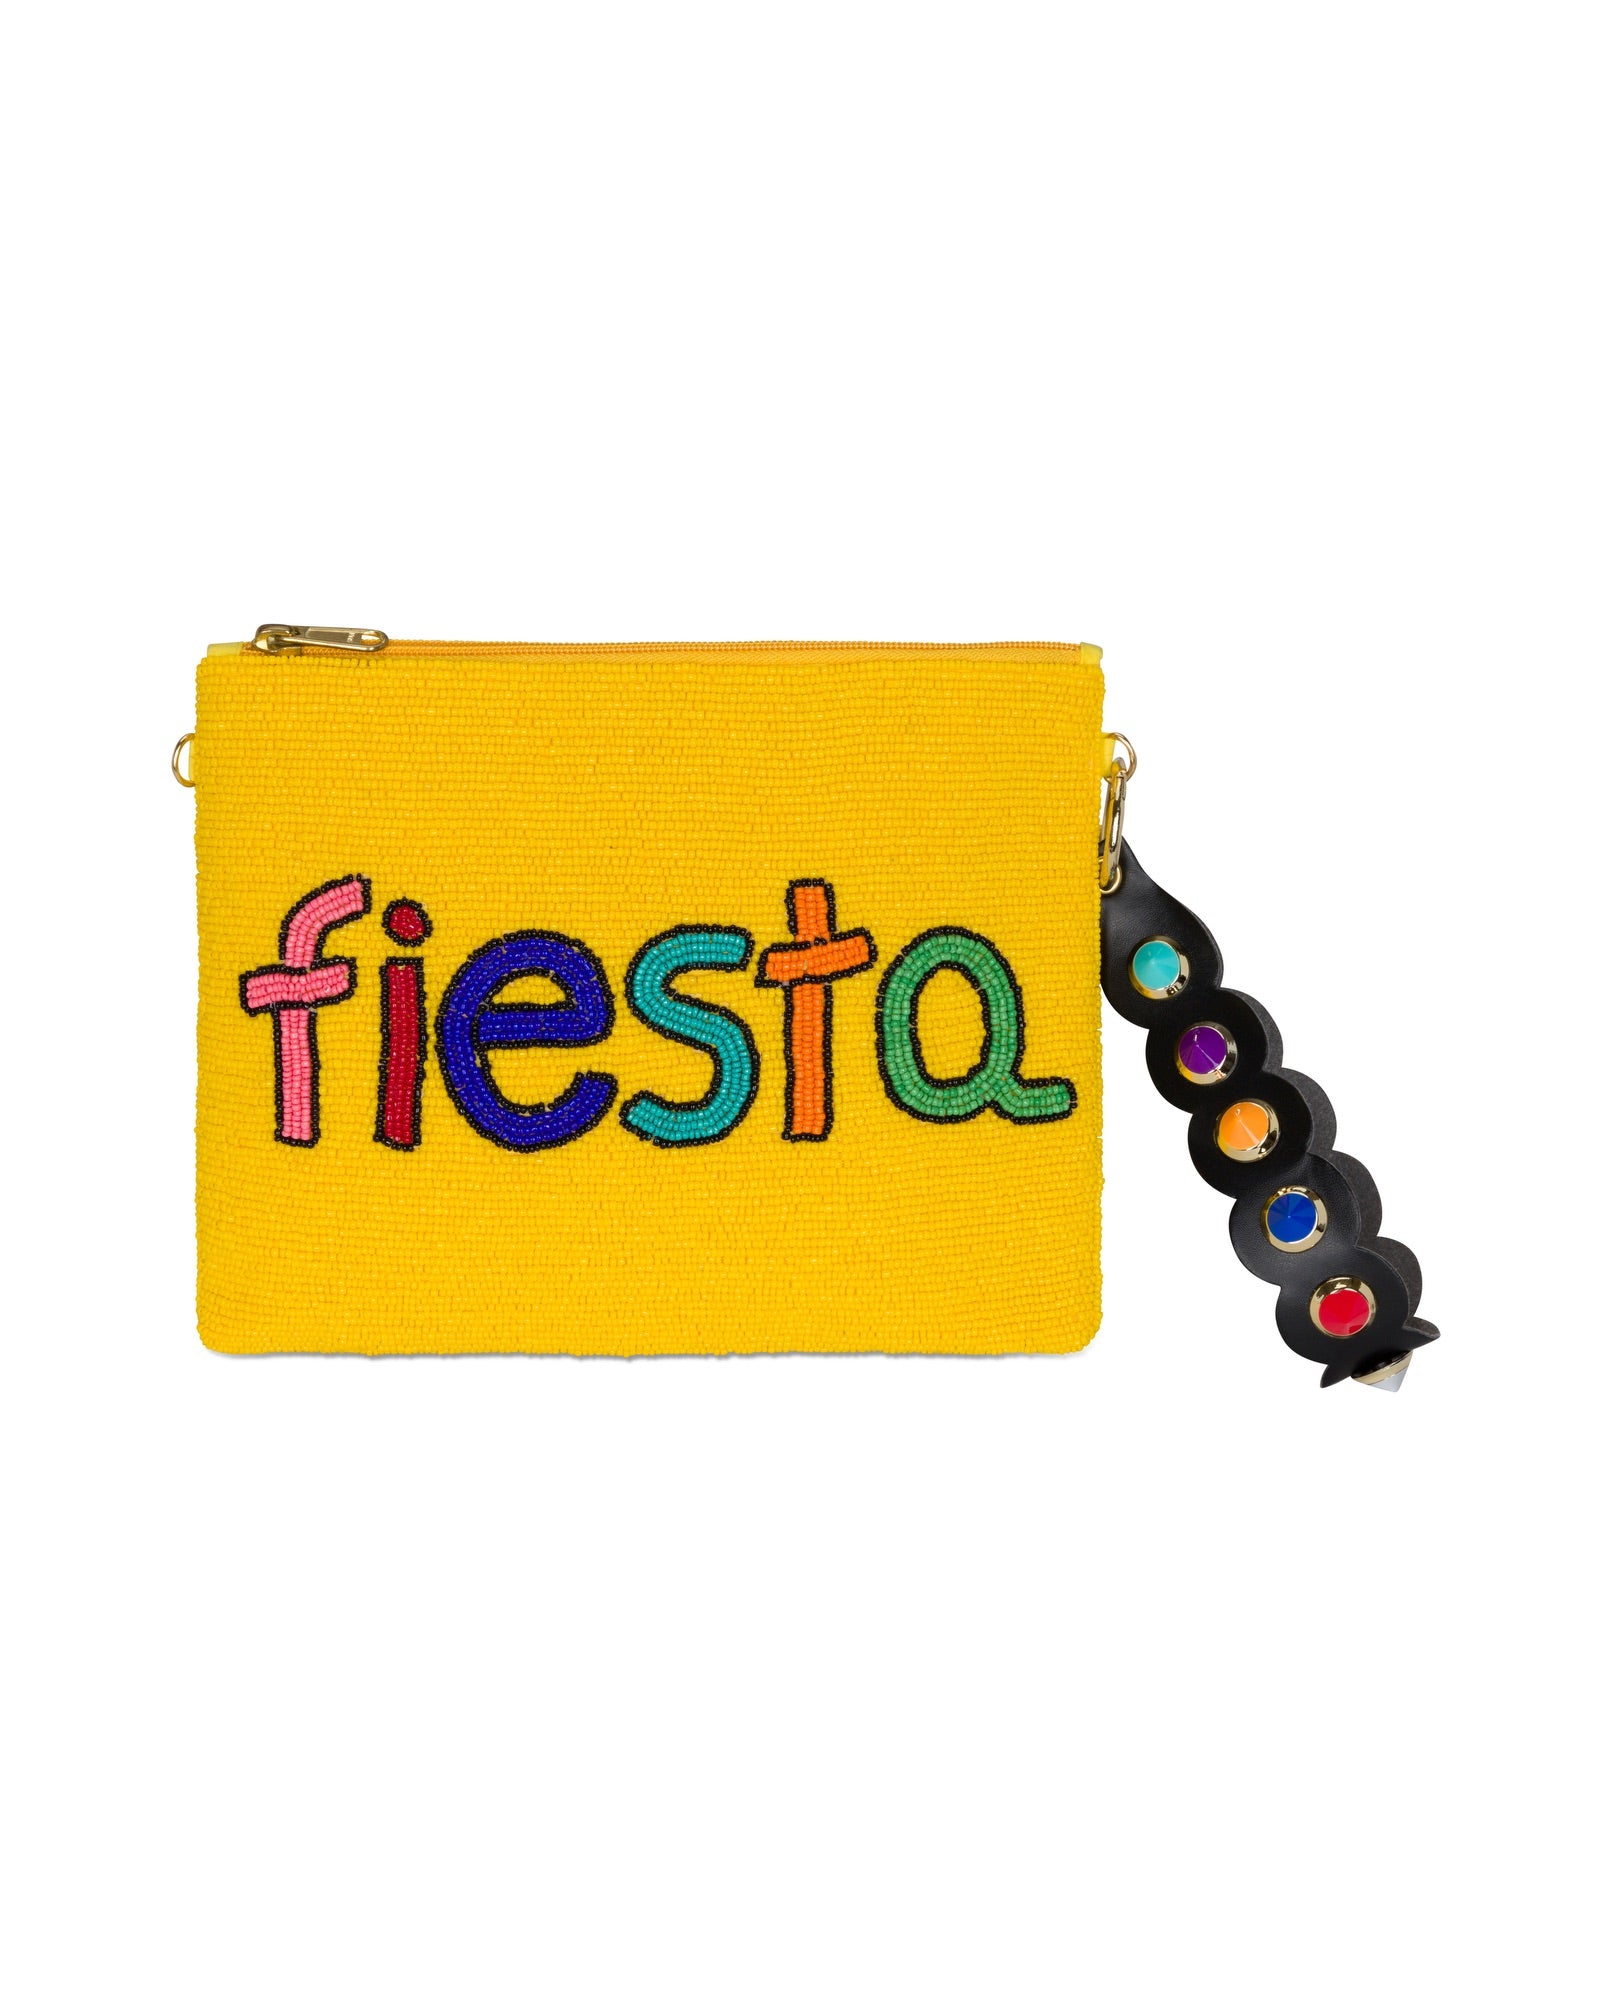 Fiesta Fabulousa Beaded Clutch